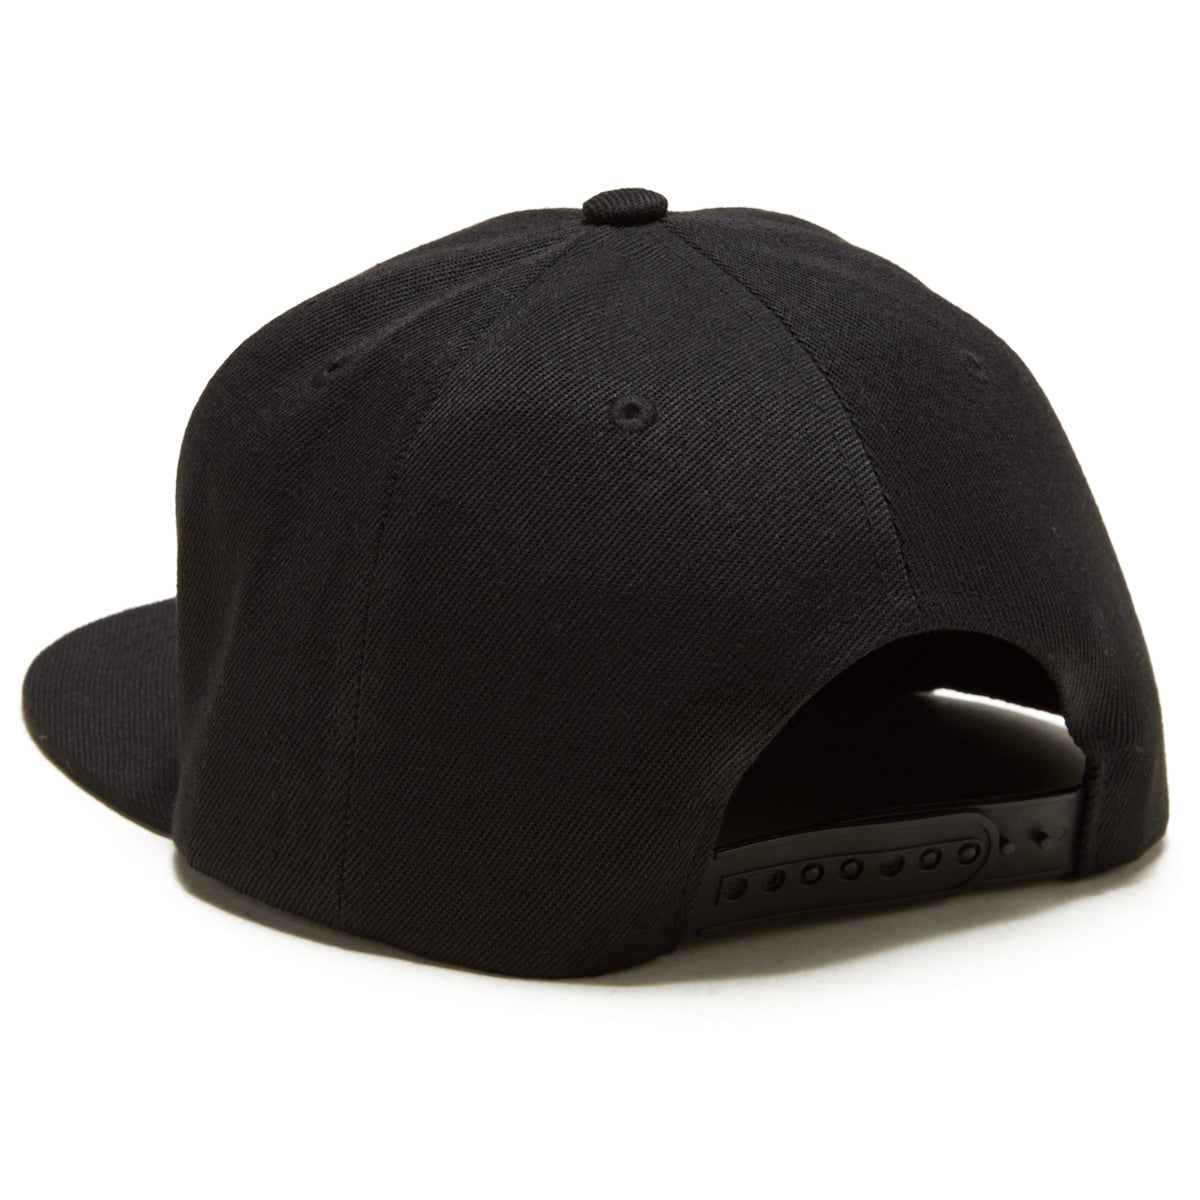 Dogtown Blue Cross Patch Snapback Hat - Black image 2